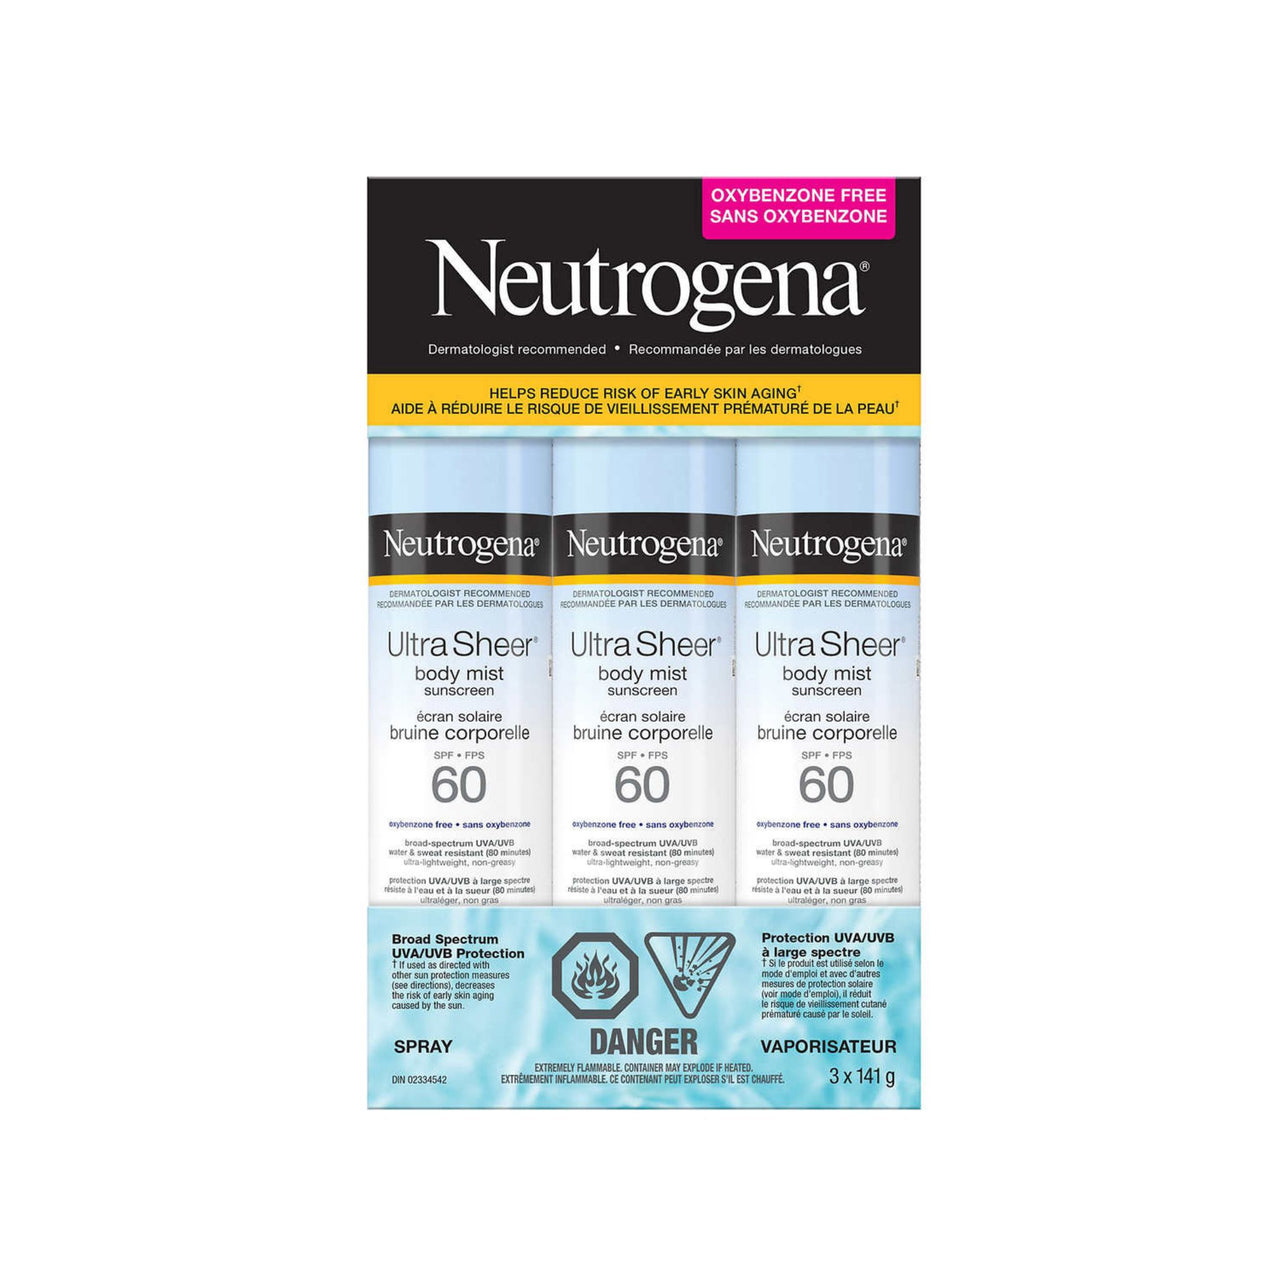 Neutrogena Ultra Sheer Sunscreen Spray 3x141g Shipped to Nunavut